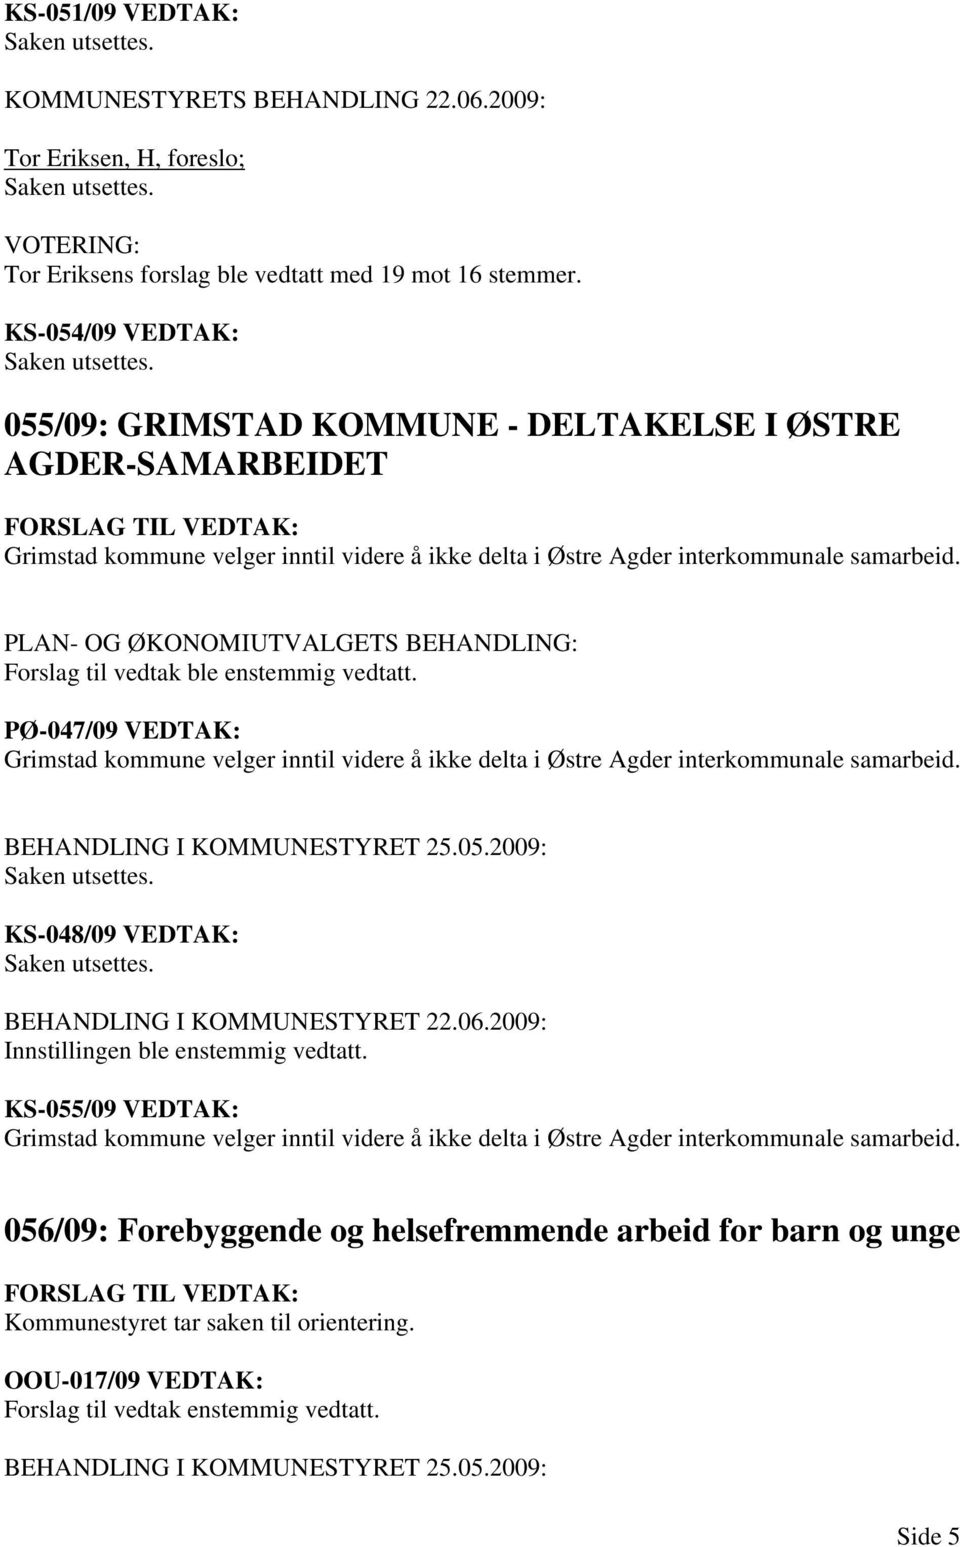 055/09: GRIMSTAD KOMMUNE - DELTAKELSE I ØSTRE AGDER-SAMARBEIDET FORSLAG TIL VEDTAK: Grimstad kommune velger inntil videre å ikke delta i Østre Agder interkommunale samarbeid.